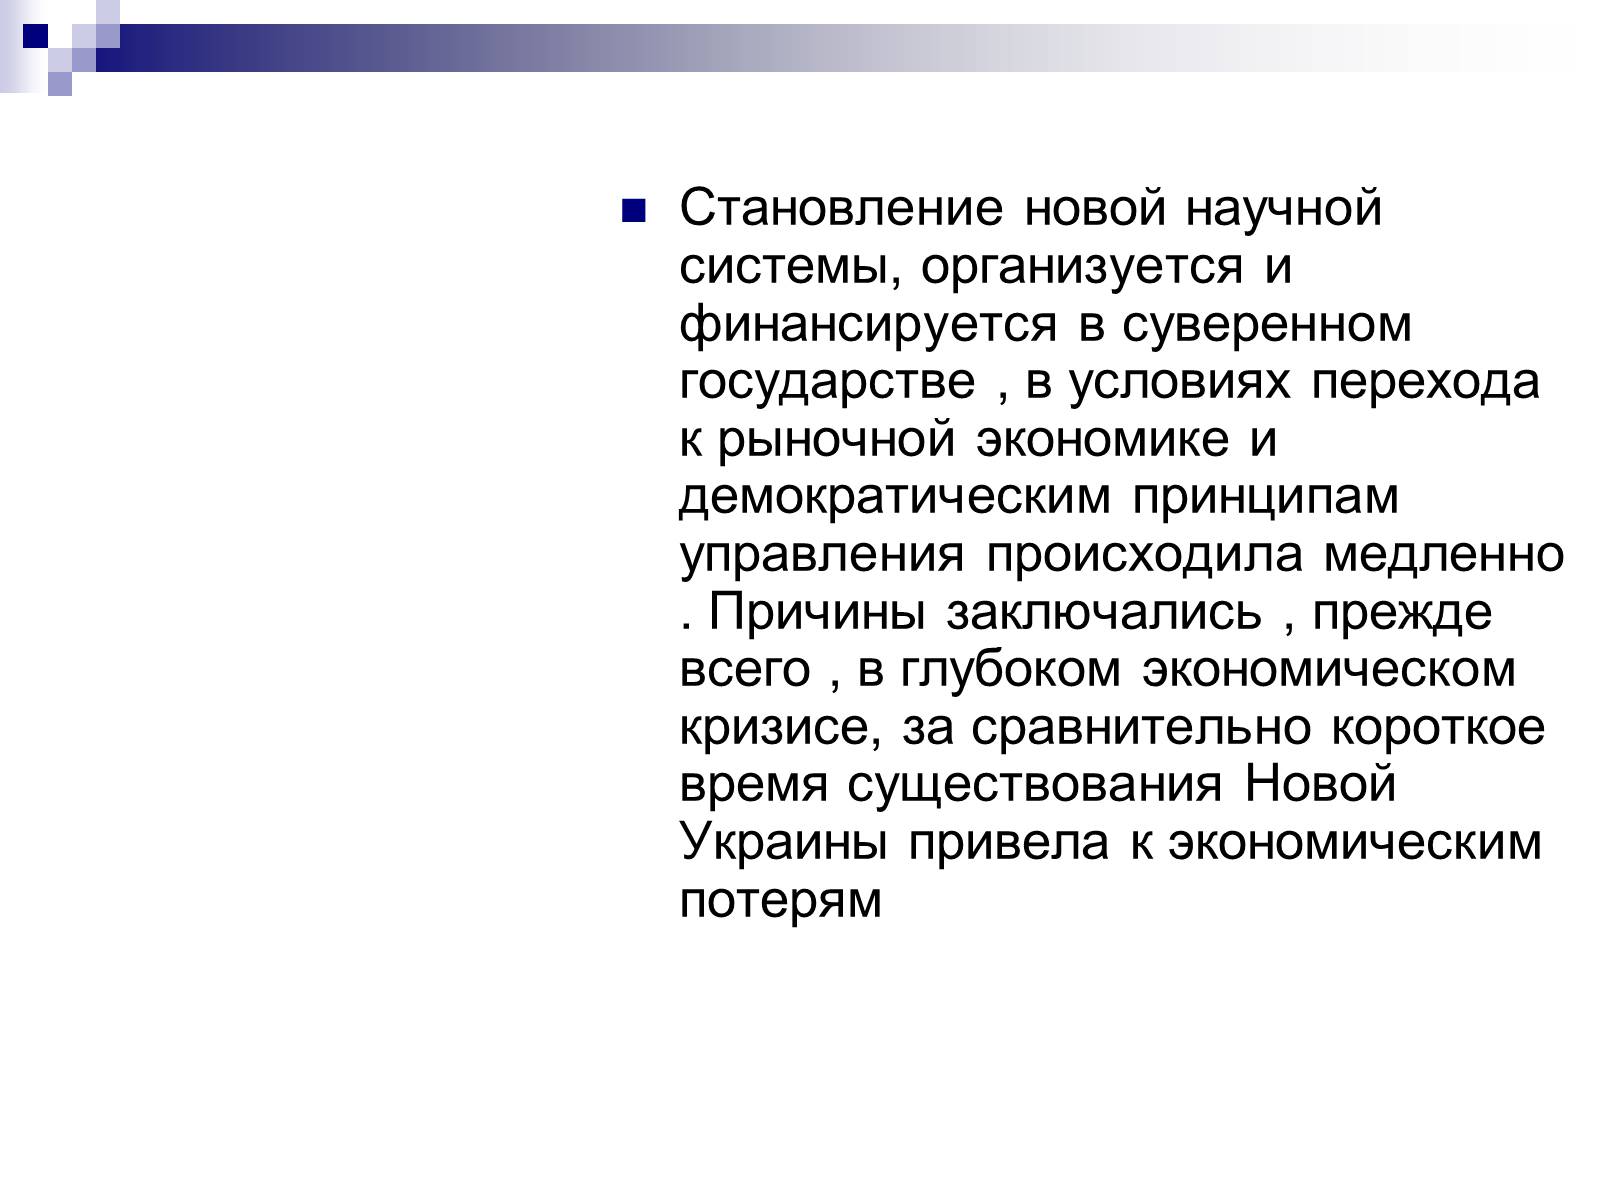 Презентація на тему «Основные тенденции развития науки в Украине» - Слайд #3